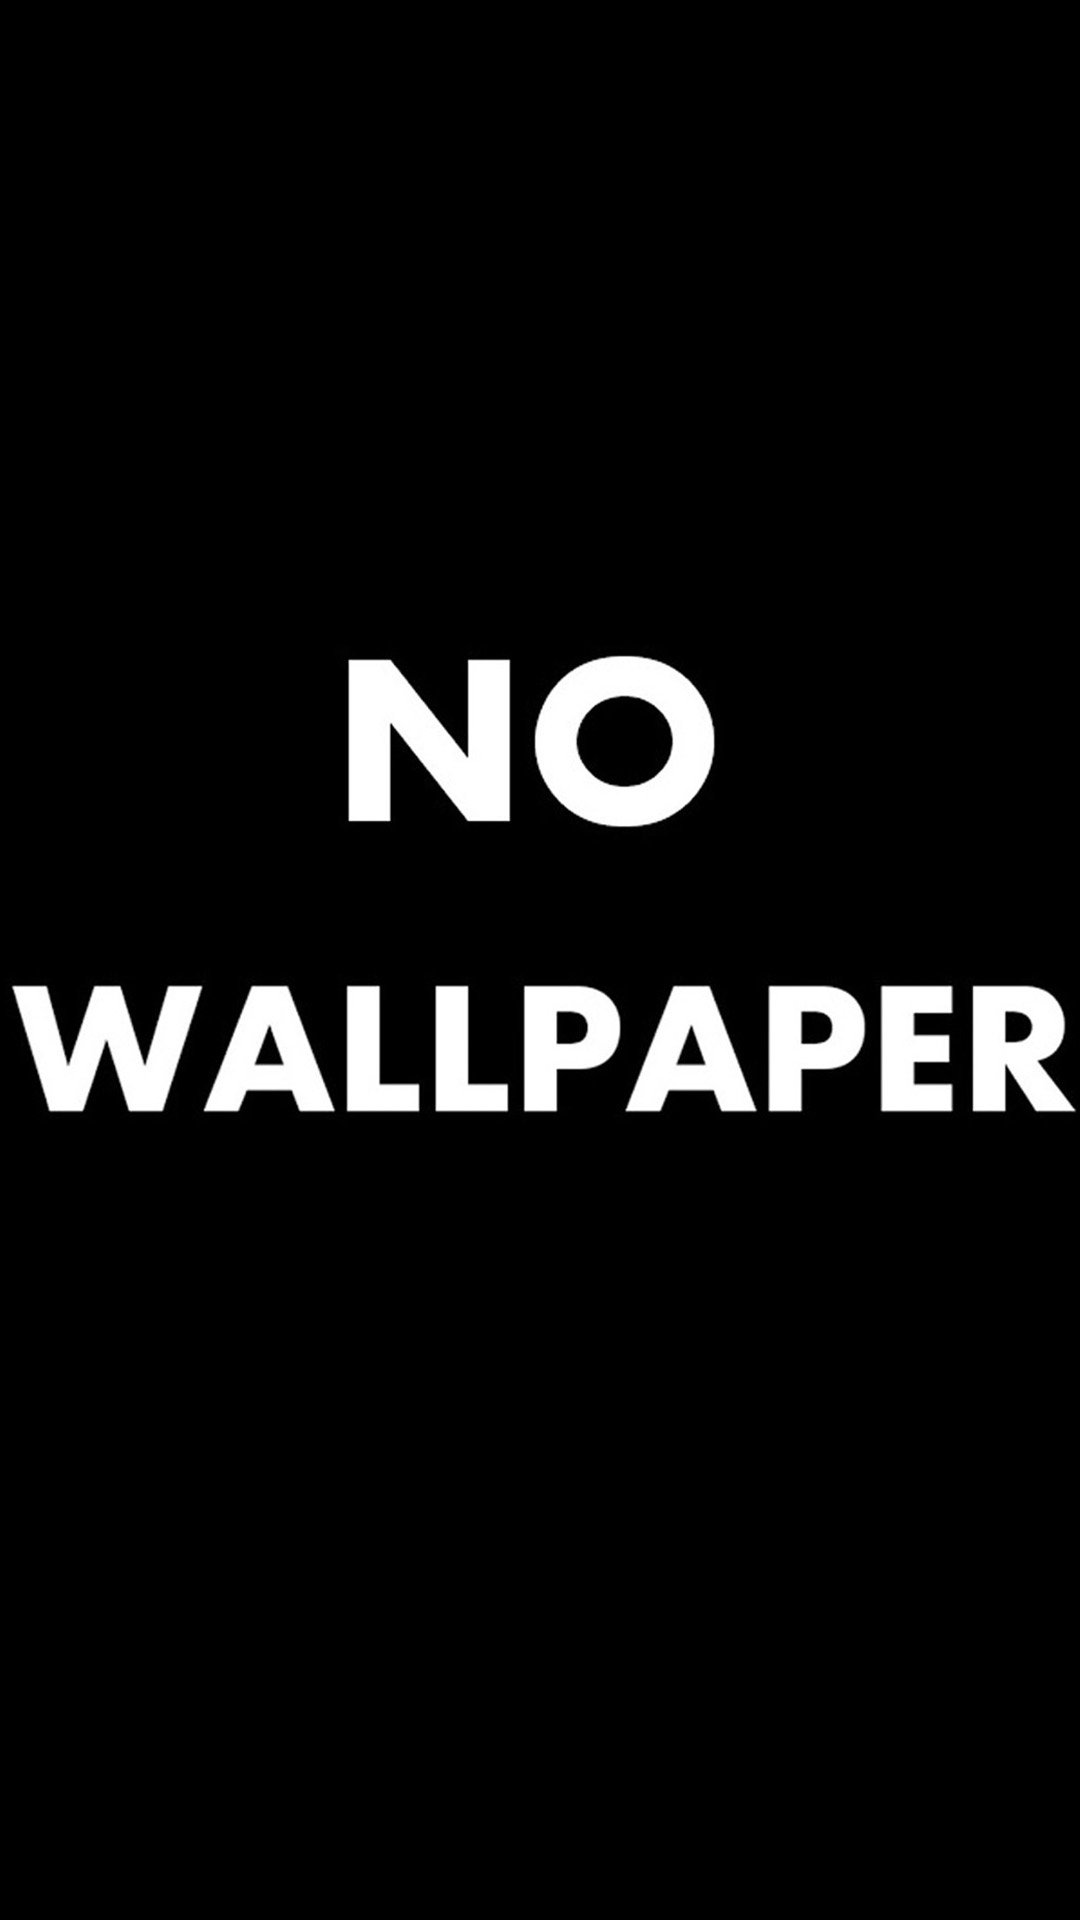 No Wallpaper Xperia Android Wallpaper free download